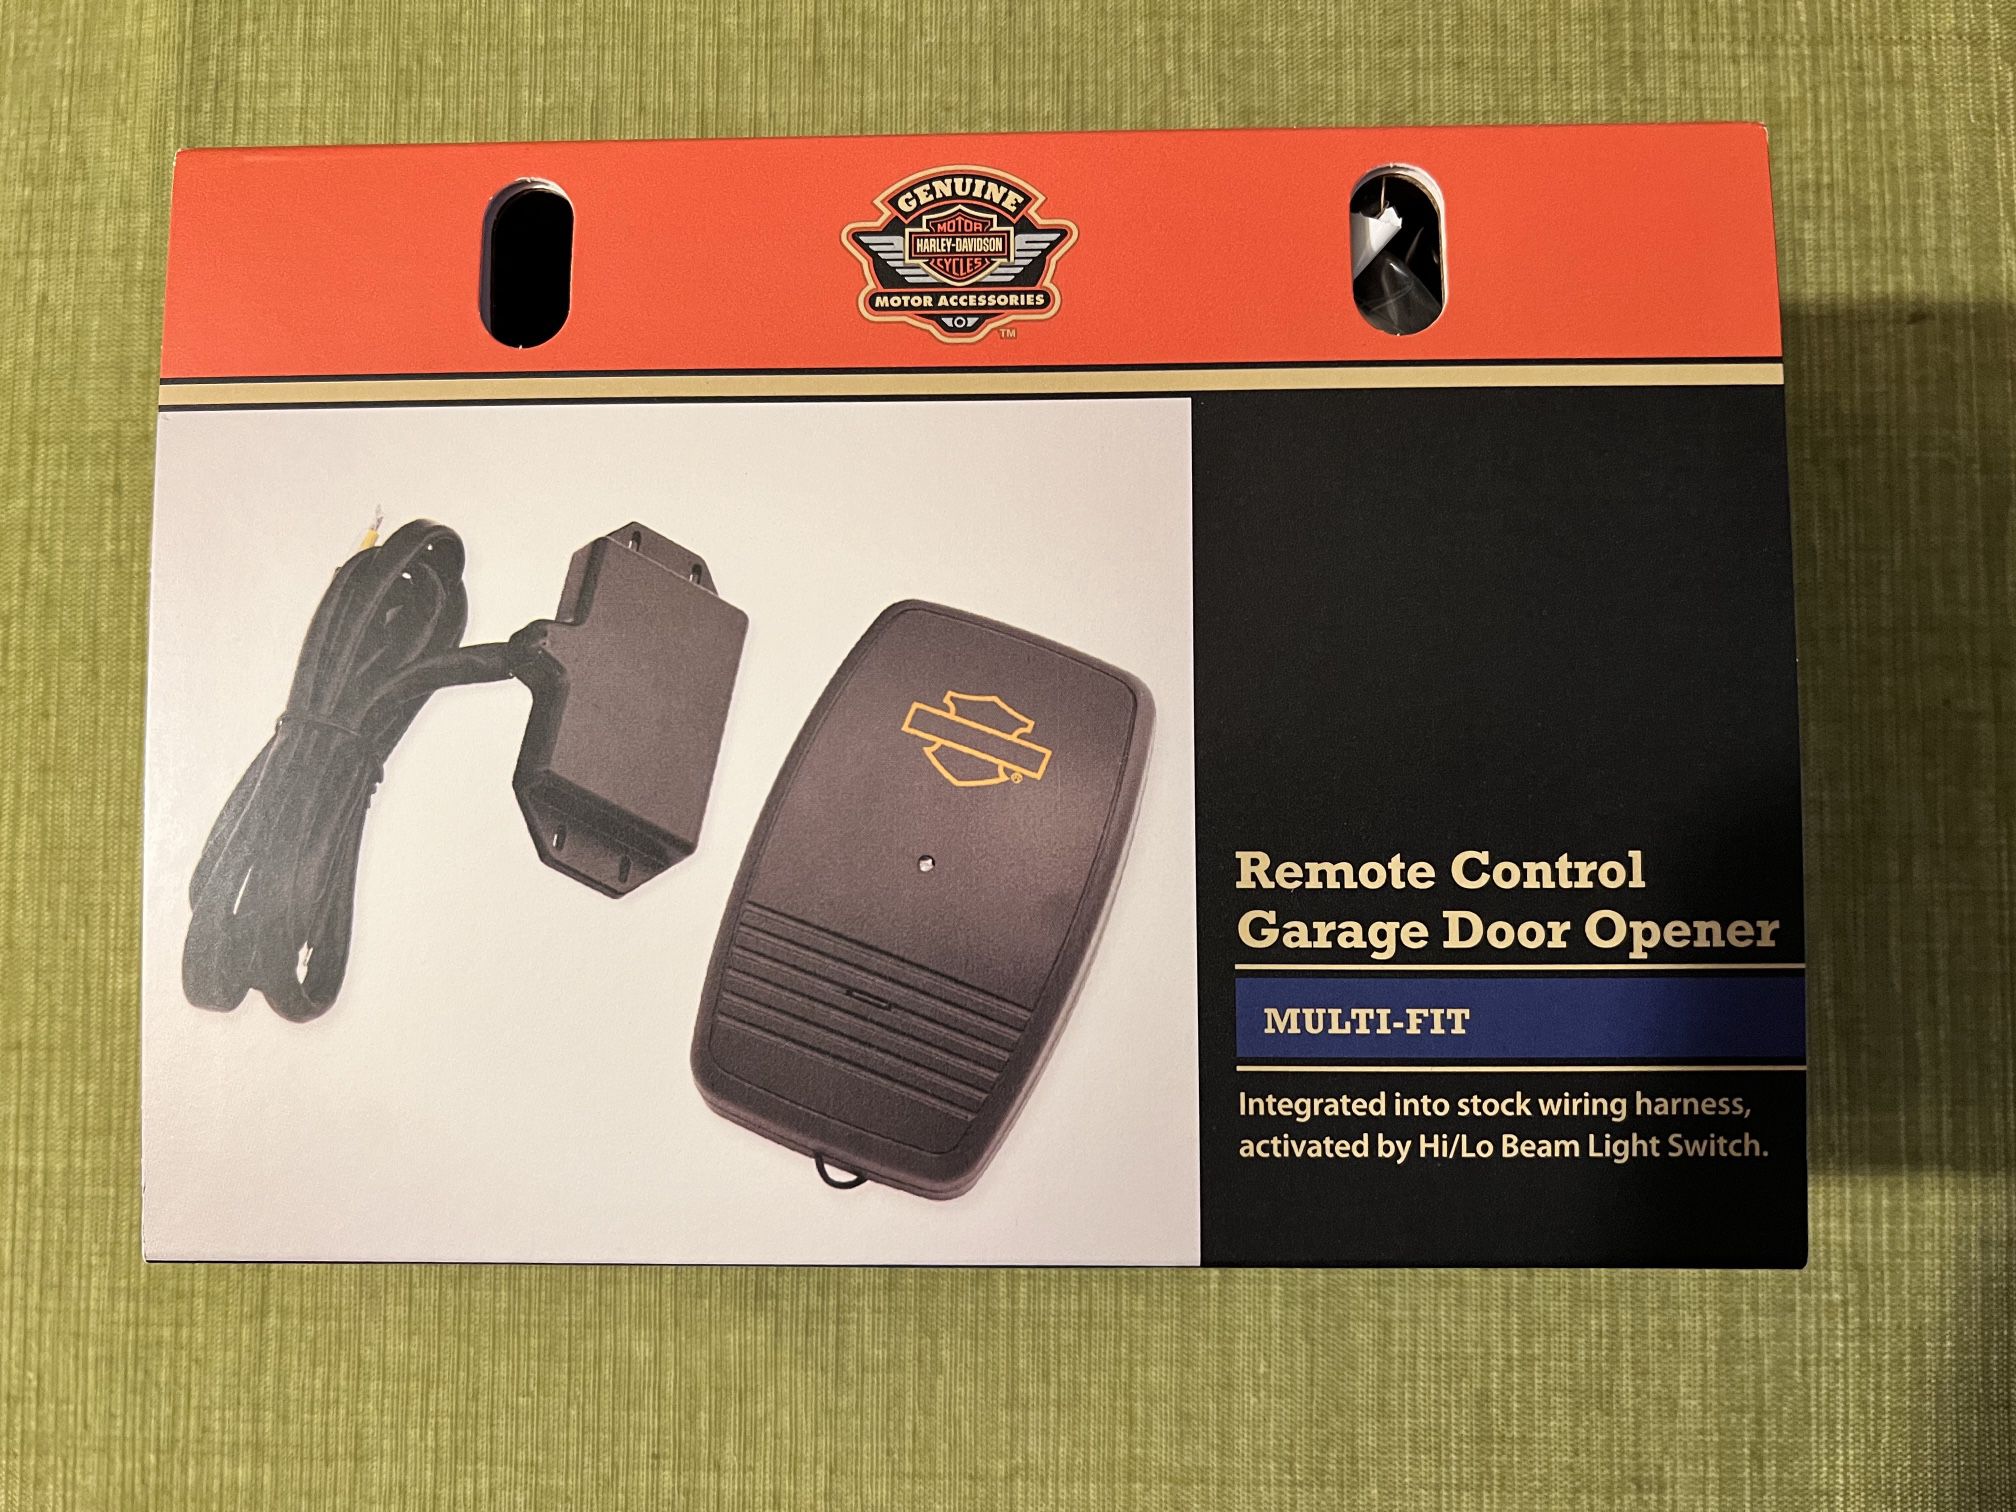 Harley Davidson remote control garage door opener. See photos for fitment. 